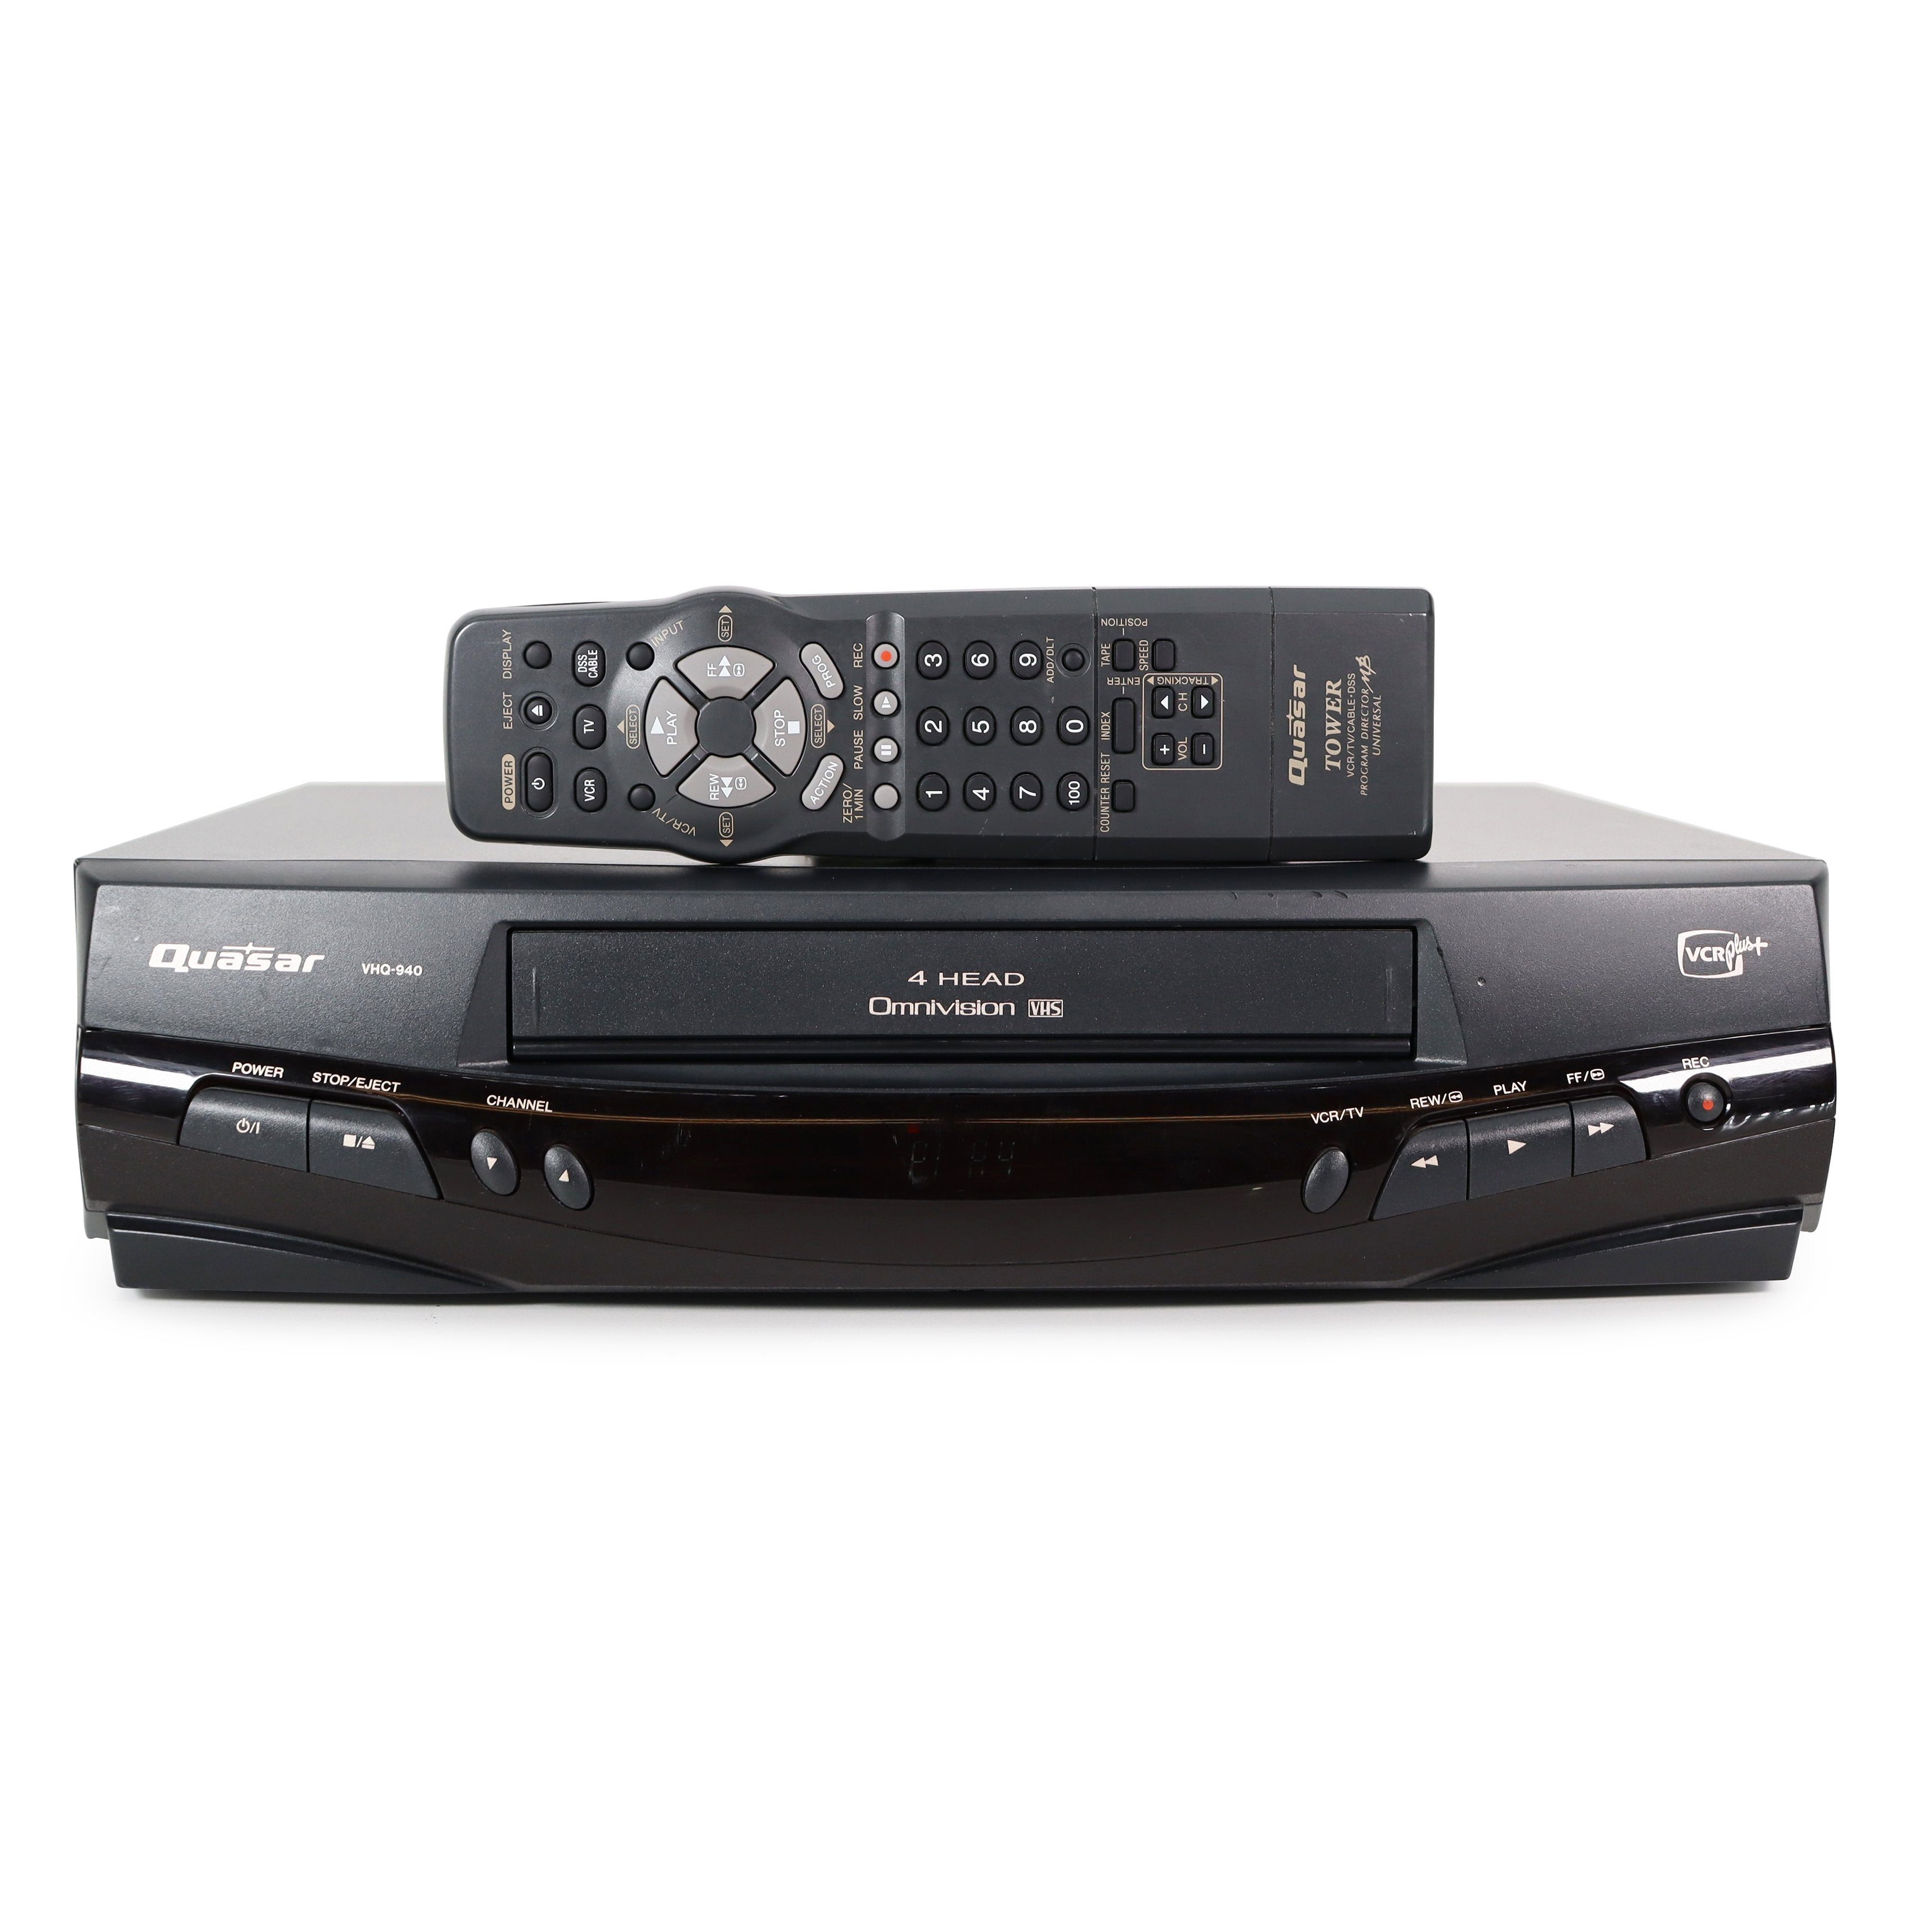 Quasar VHQ-940 4 Head Mono VCR VHS Player Recorder with Omnivision (19